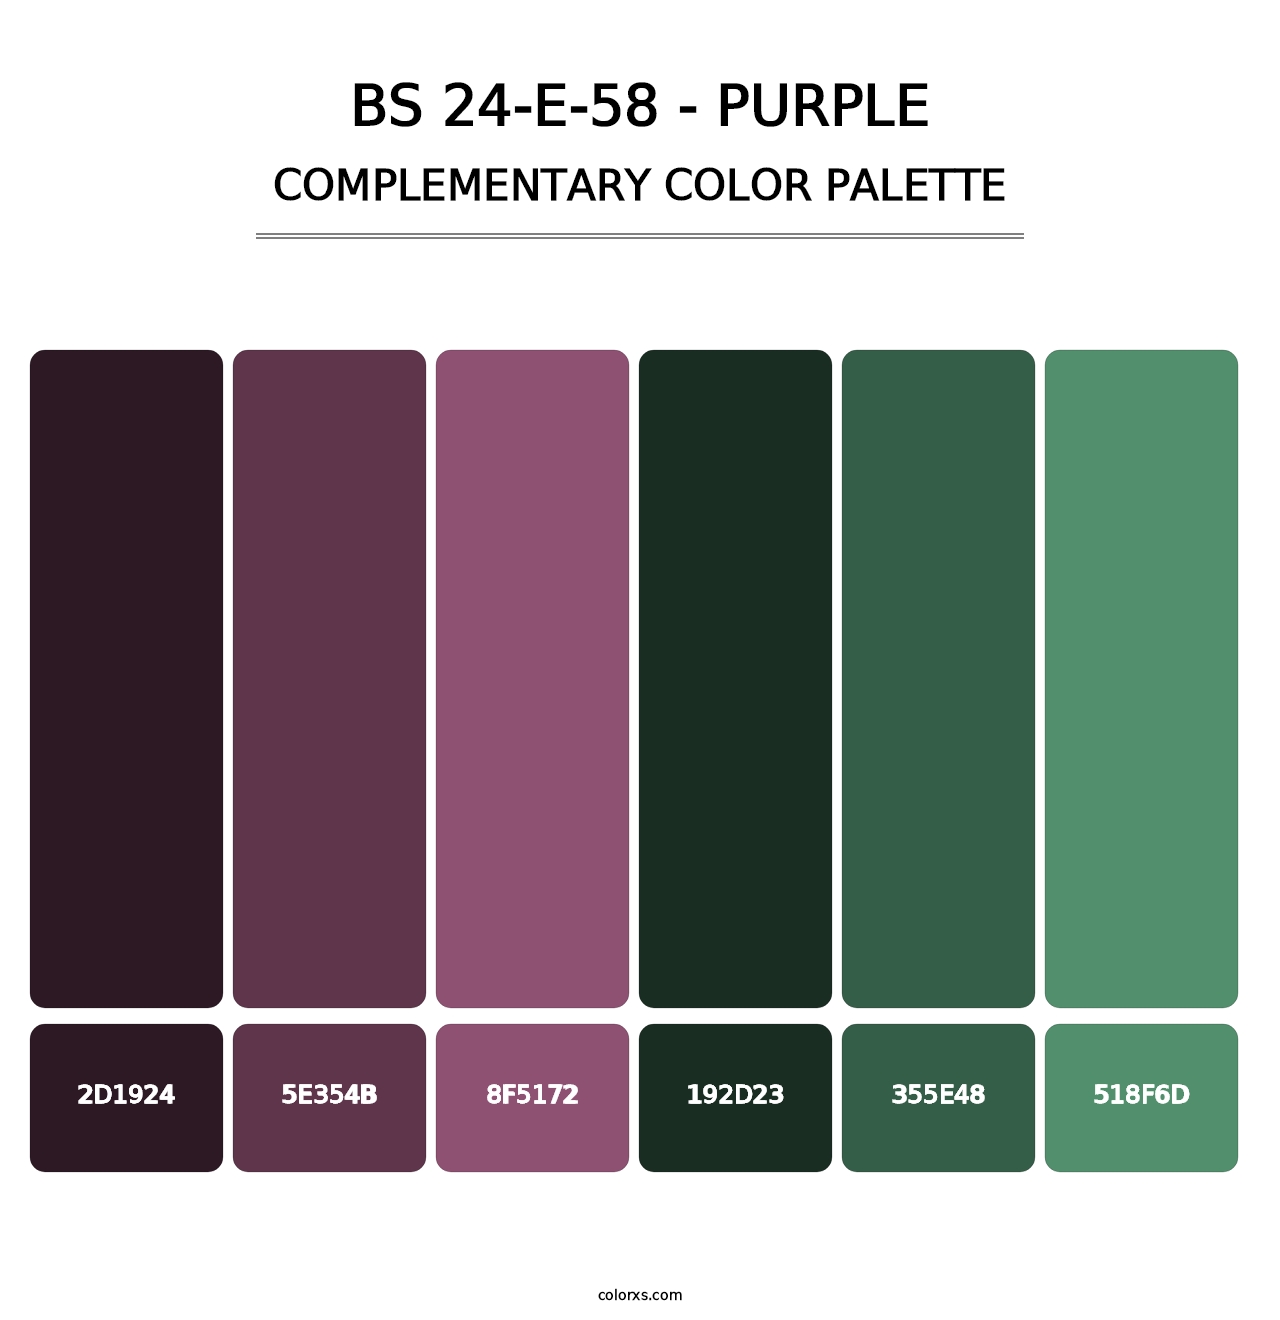 BS 24-E-58 - Purple - Complementary Color Palette